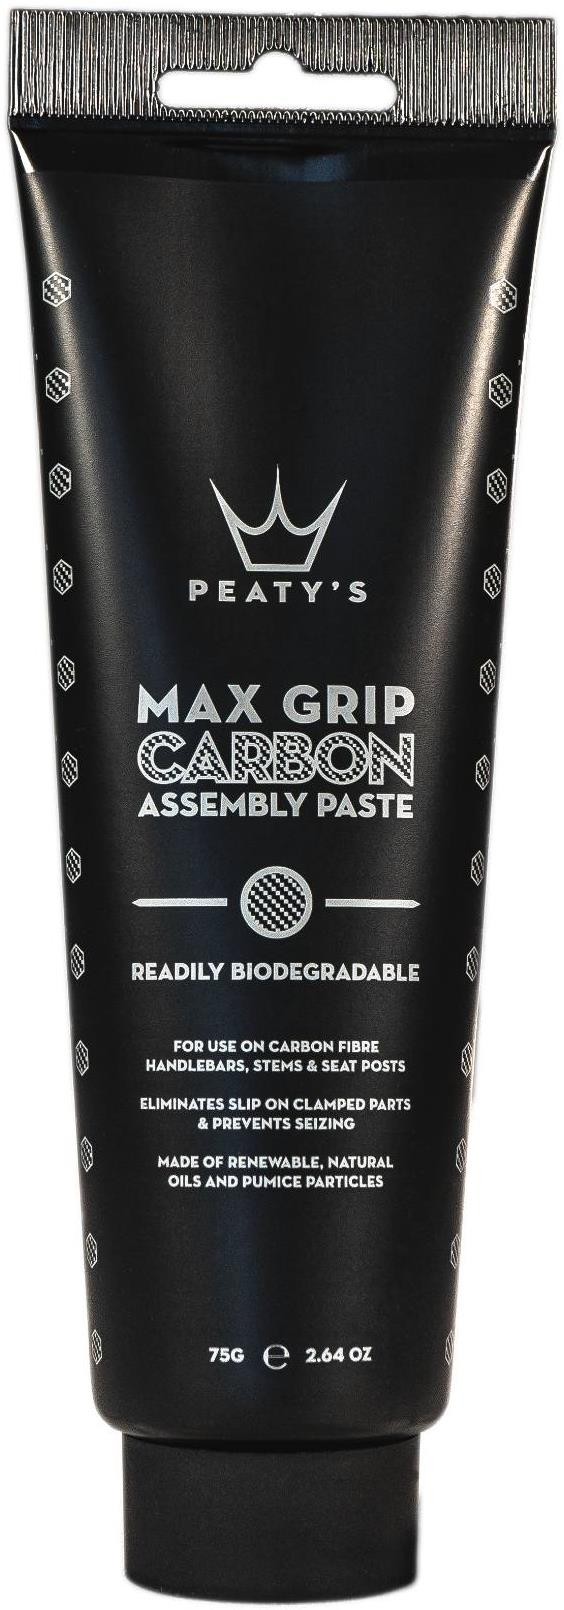 Max Grip Carbon Assembly Paste 75g image 0